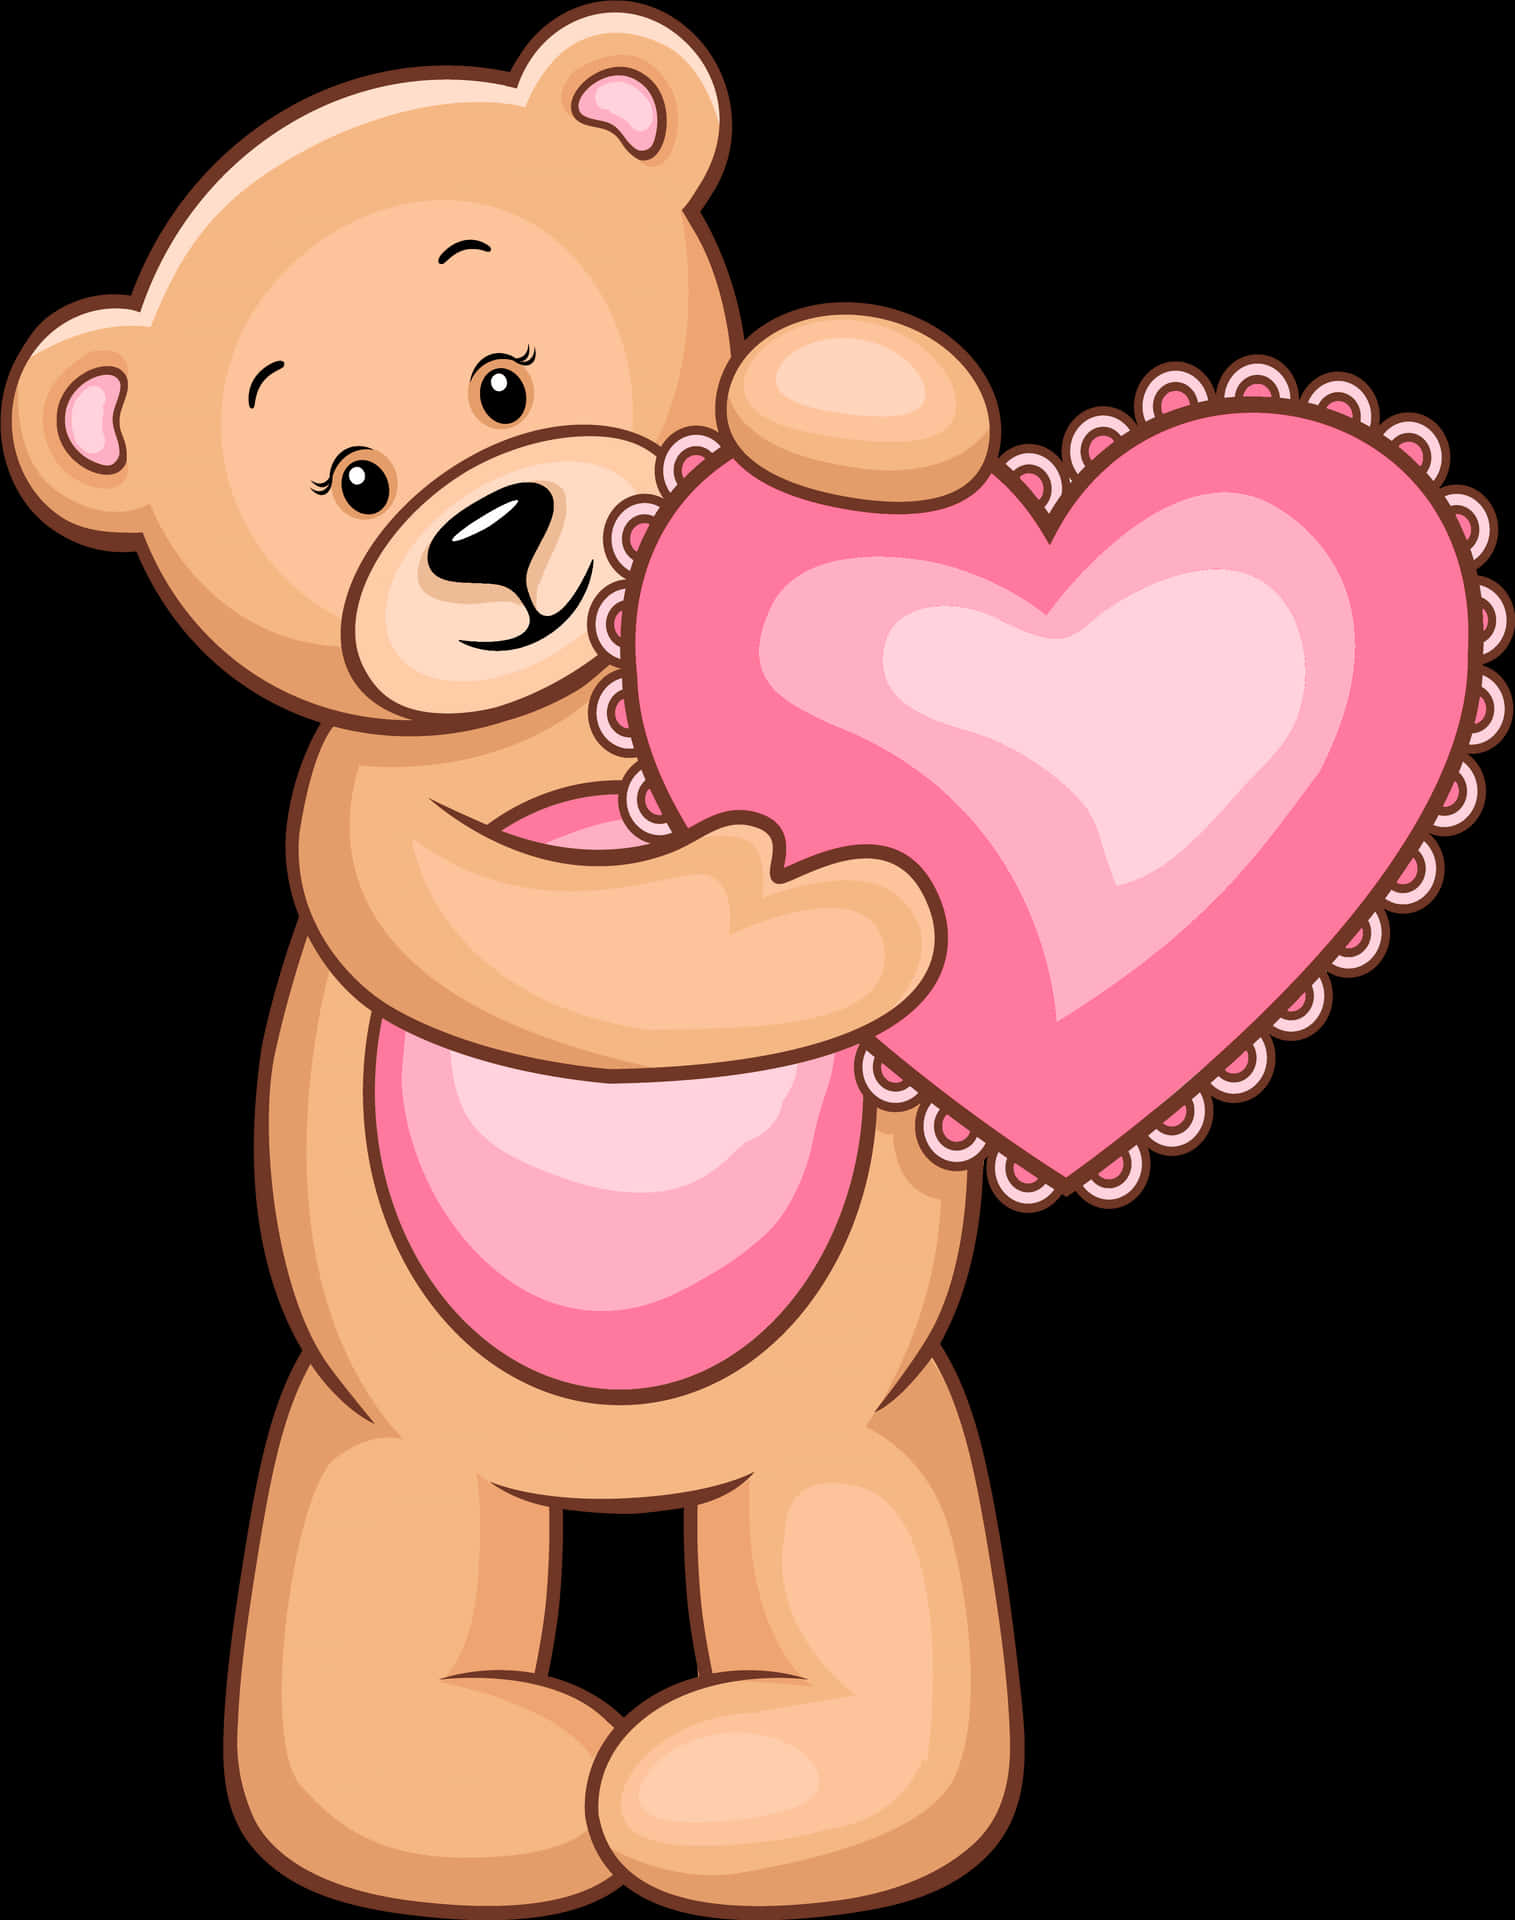 Teddy Bear Holding Heart Illustration PNG